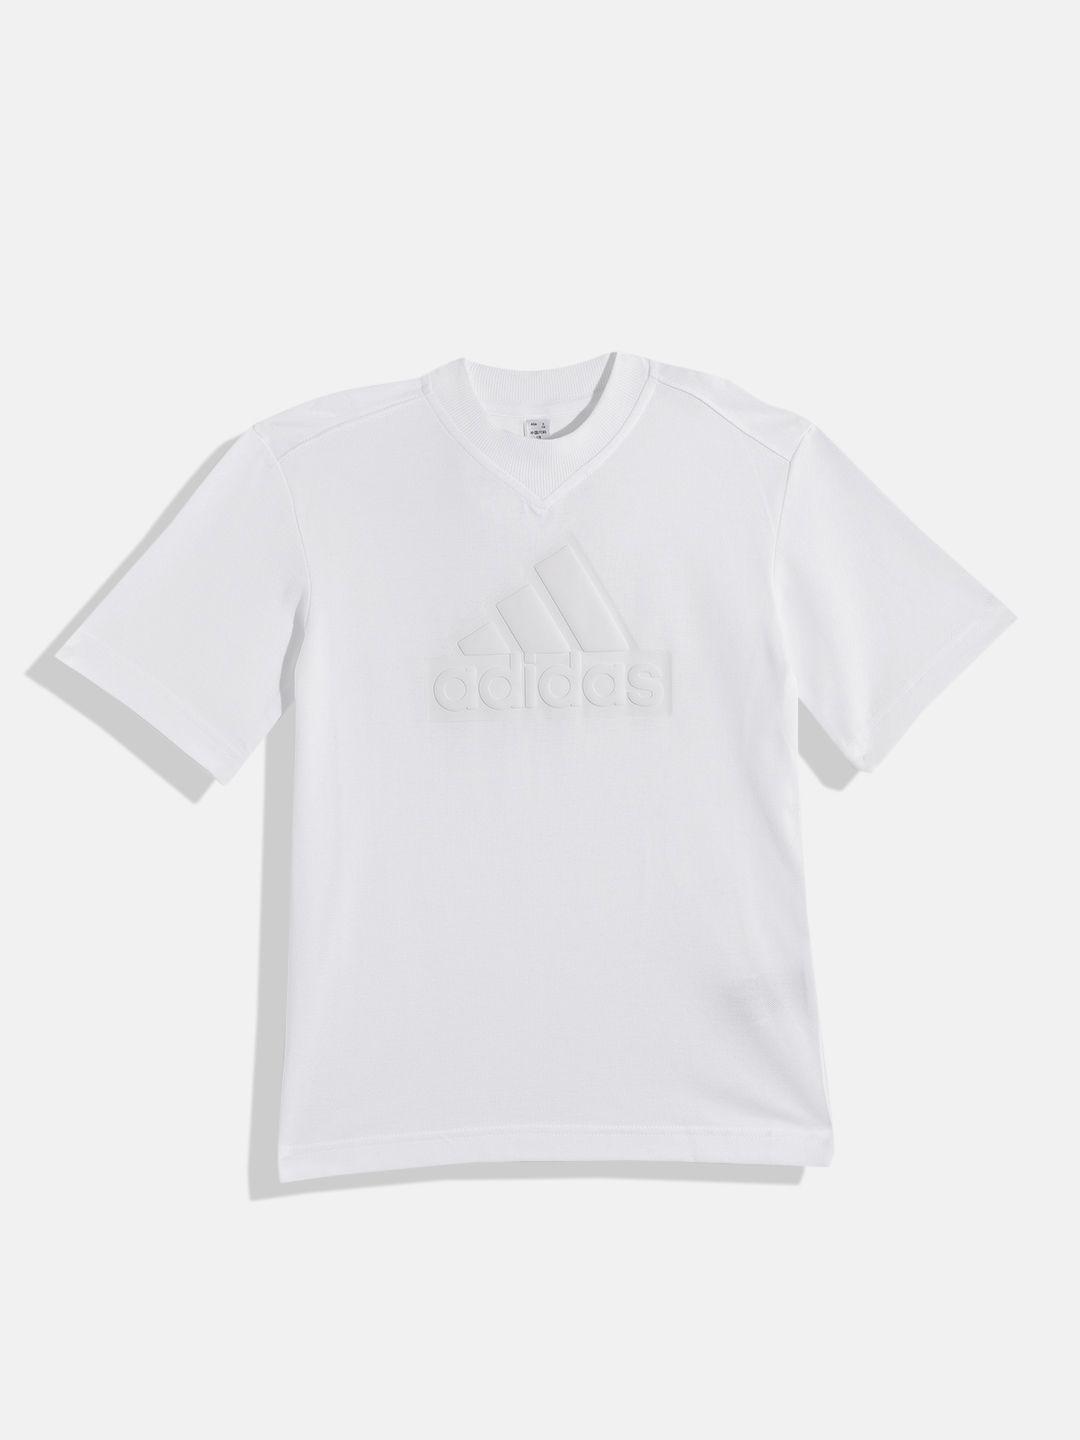 adidas kids brand logo embossed pure cotton u fi logo t-shirt